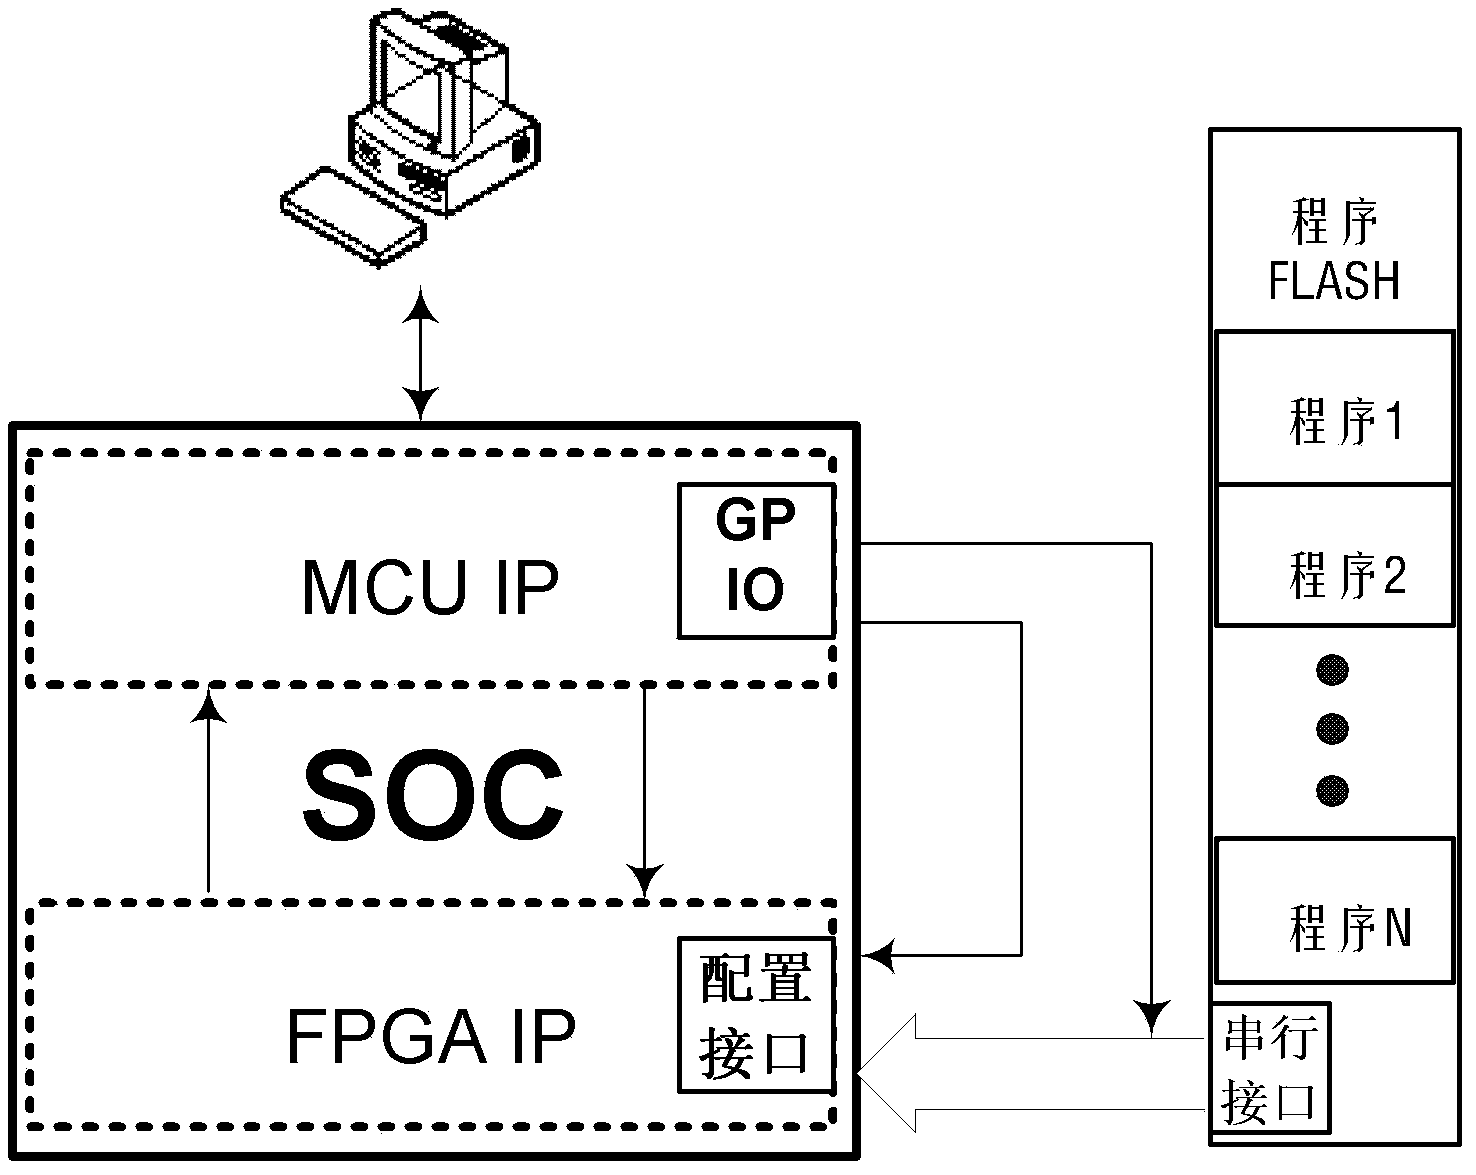 Method for replacing FPGA IP programs inside SOC by SOC